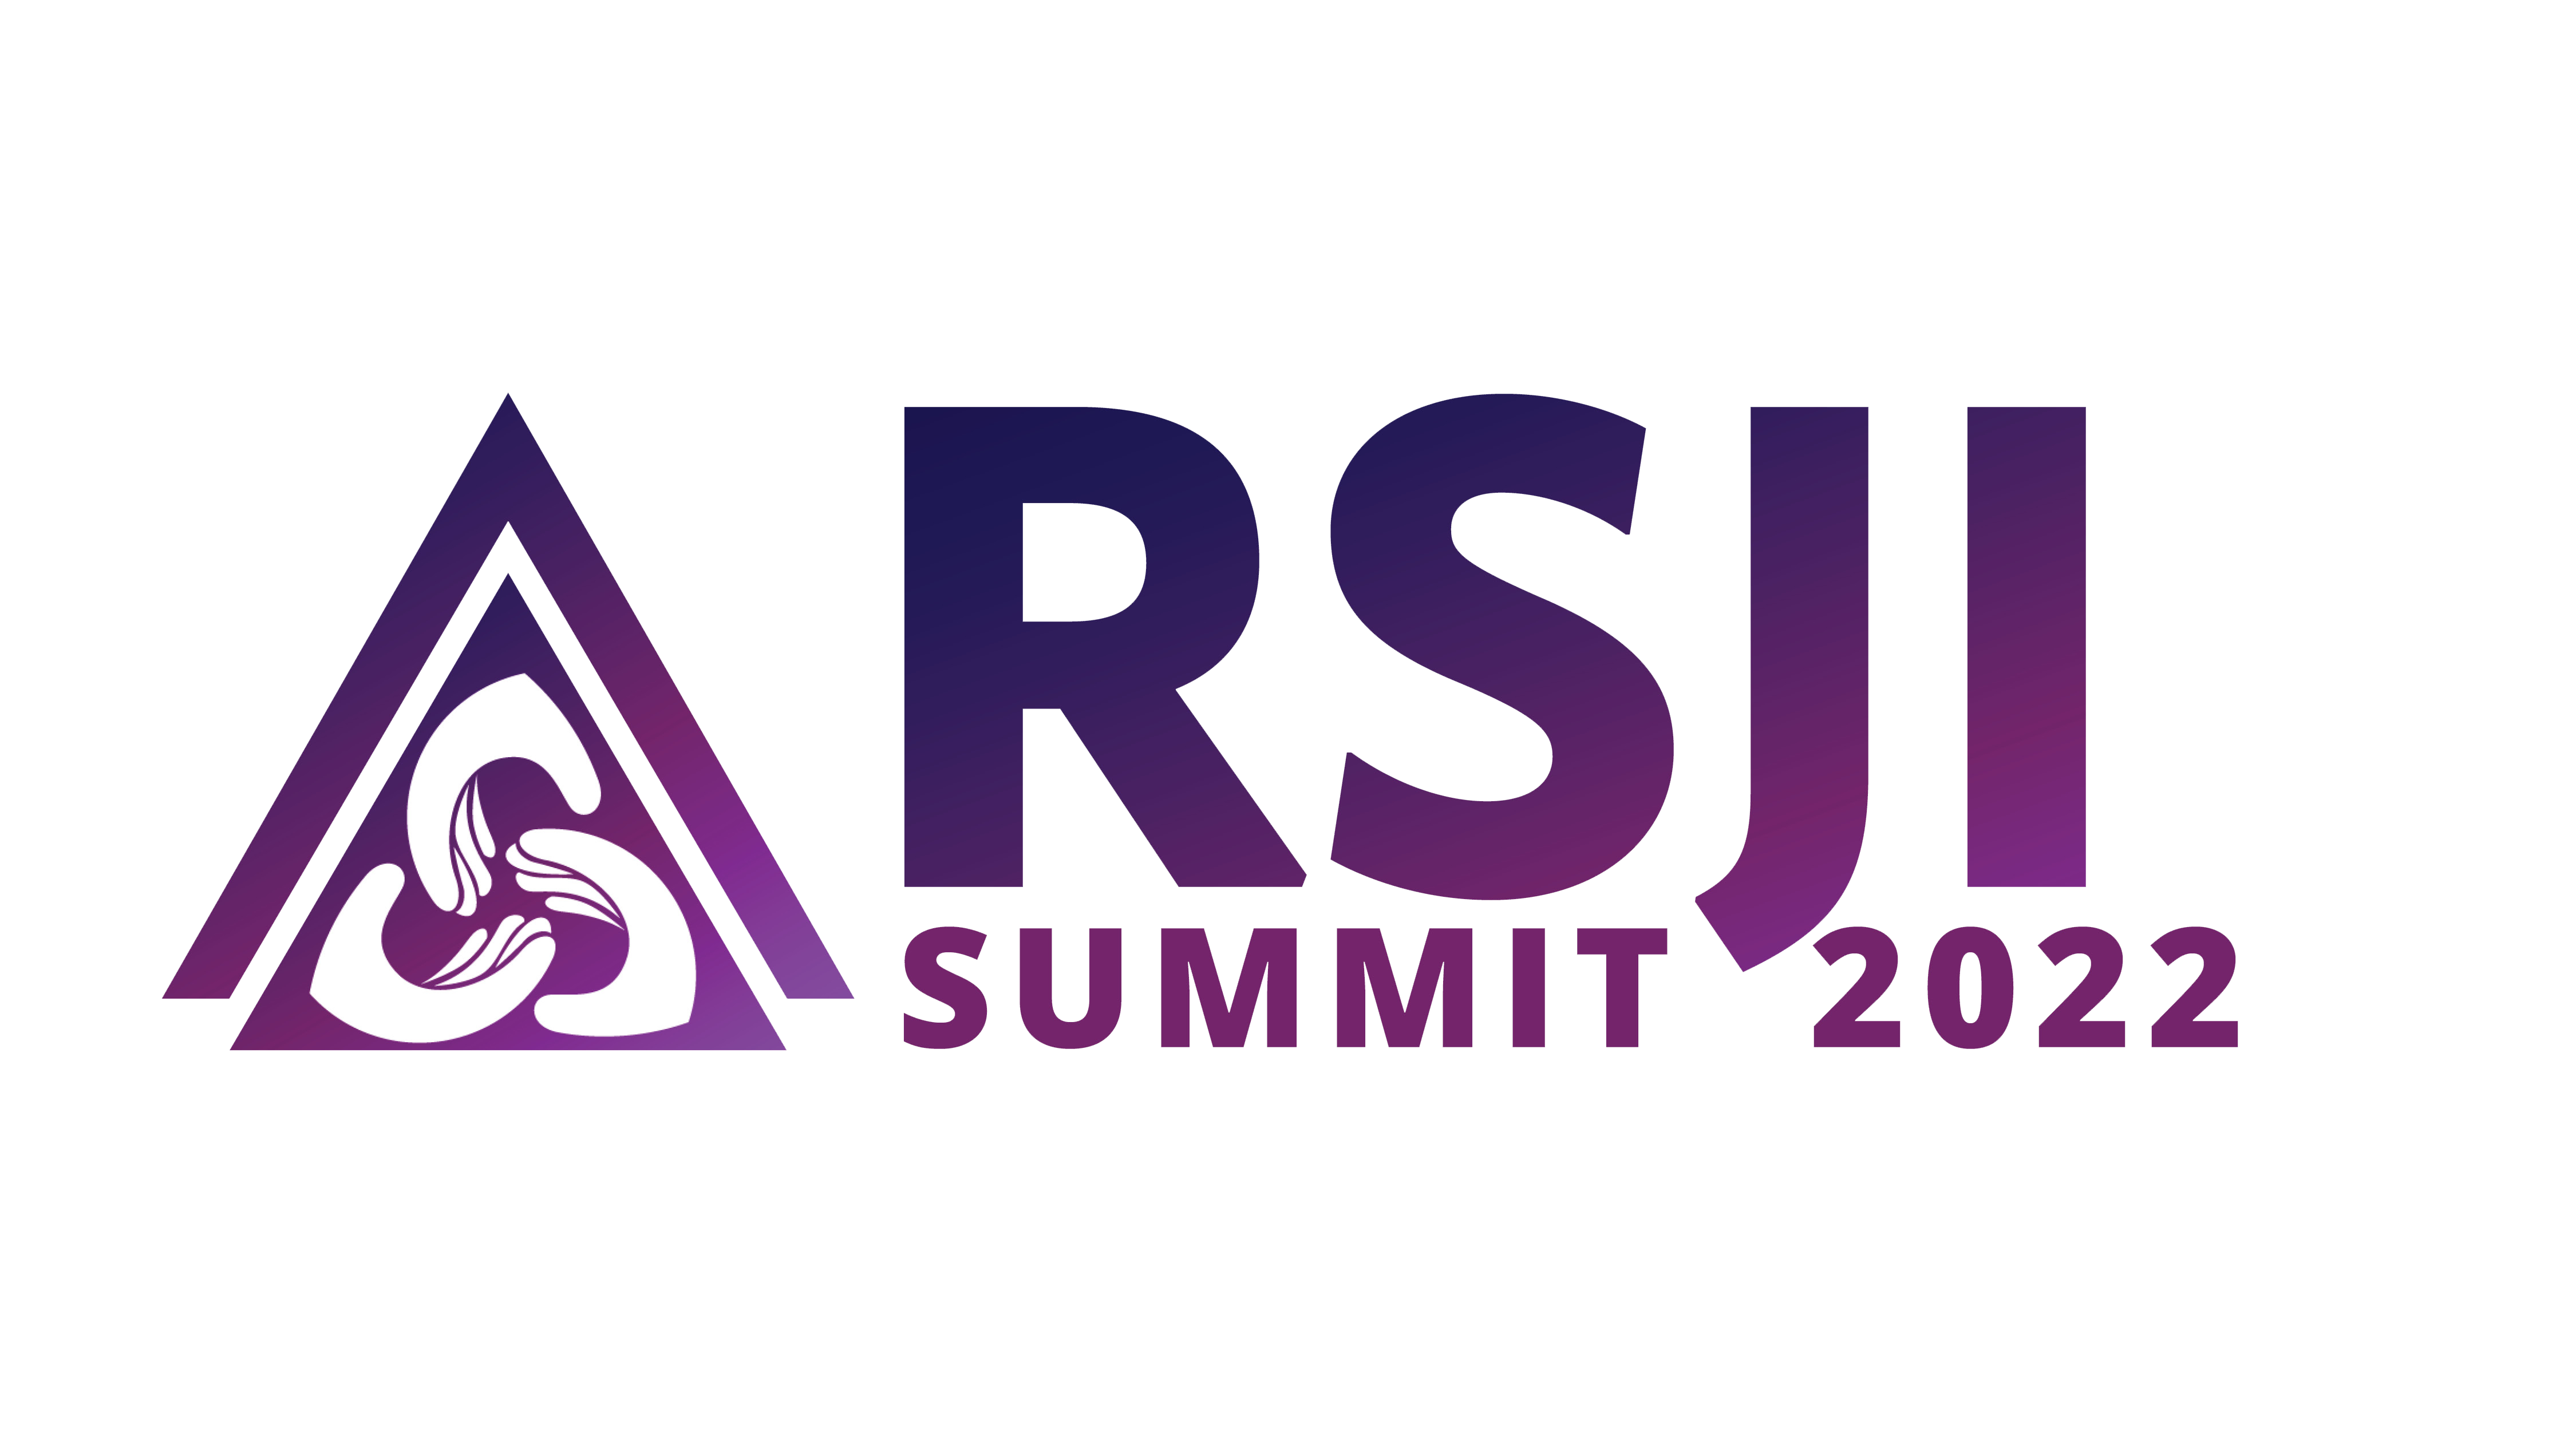 RSJI Summit logo. On the left, a triangle with interlocking hands inside. On the right, "RSJI Summit 2022".